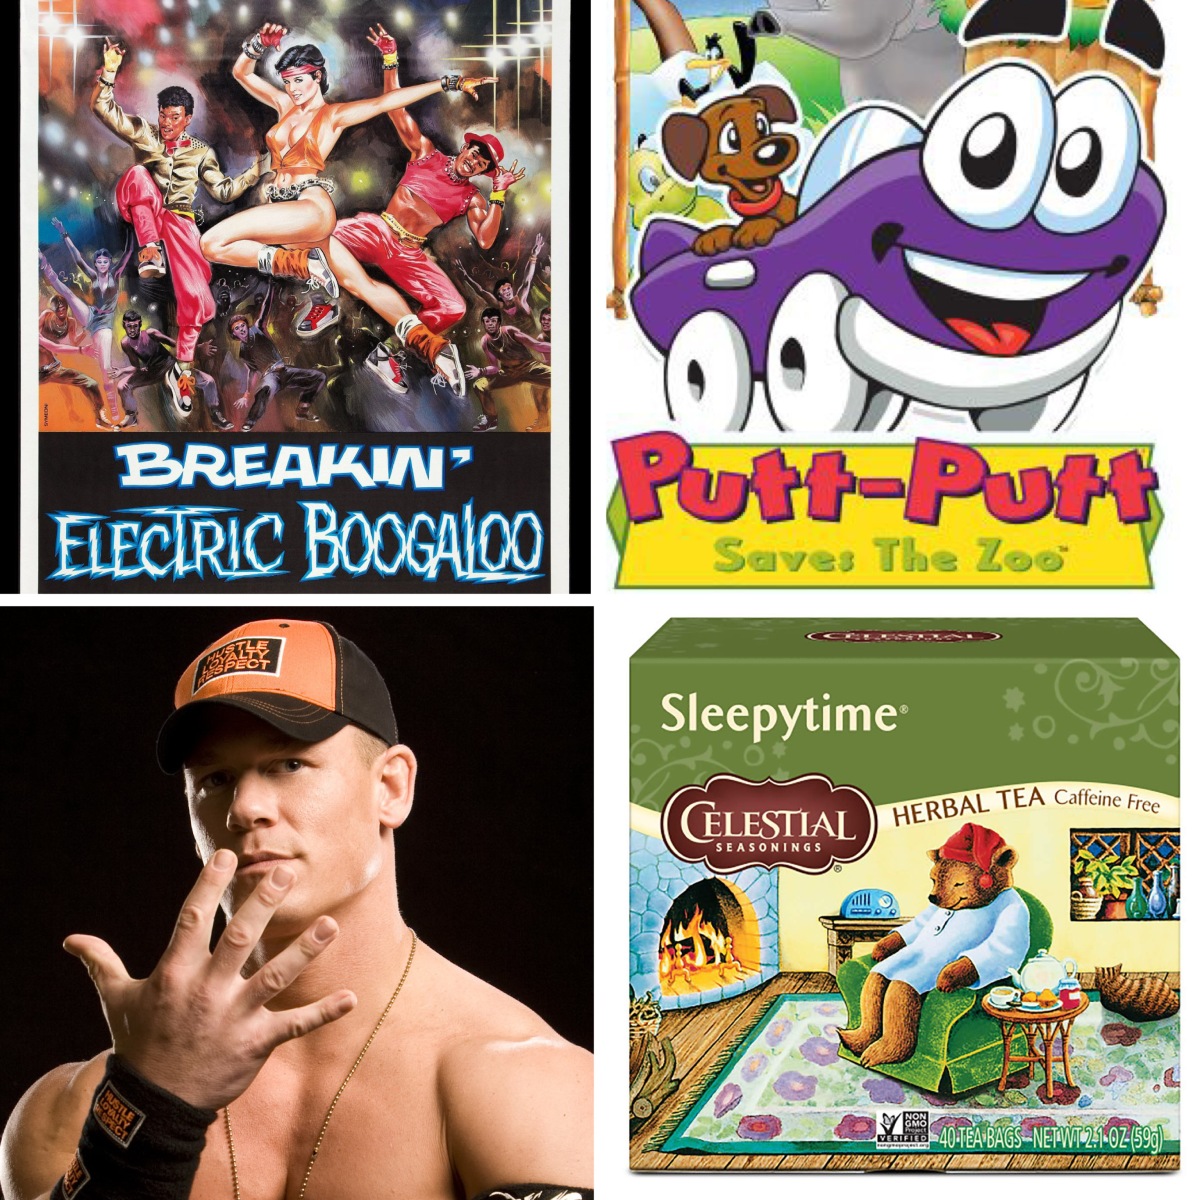 Breakin' 2: Electric Boogaloo, Putt-Putt Saves The Zoo, John Cena, and Sleepytime Herbal Tea.